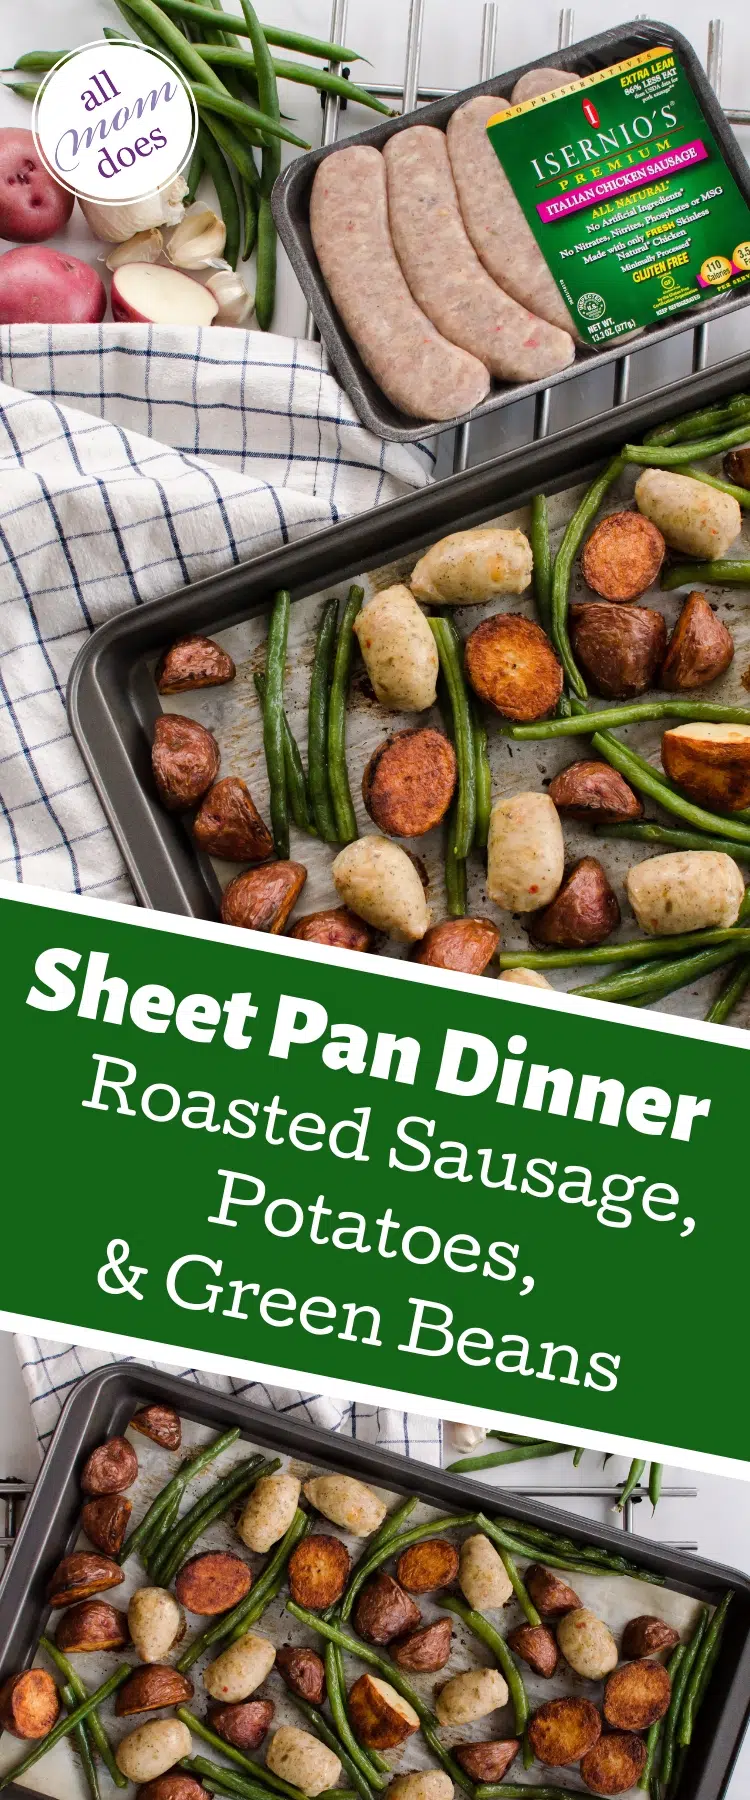 Sheet Pan Dinner - Roasted Sausage, Potatoes, and Green Beans easy recipe #simplesupper #easyrecipe #familydinner